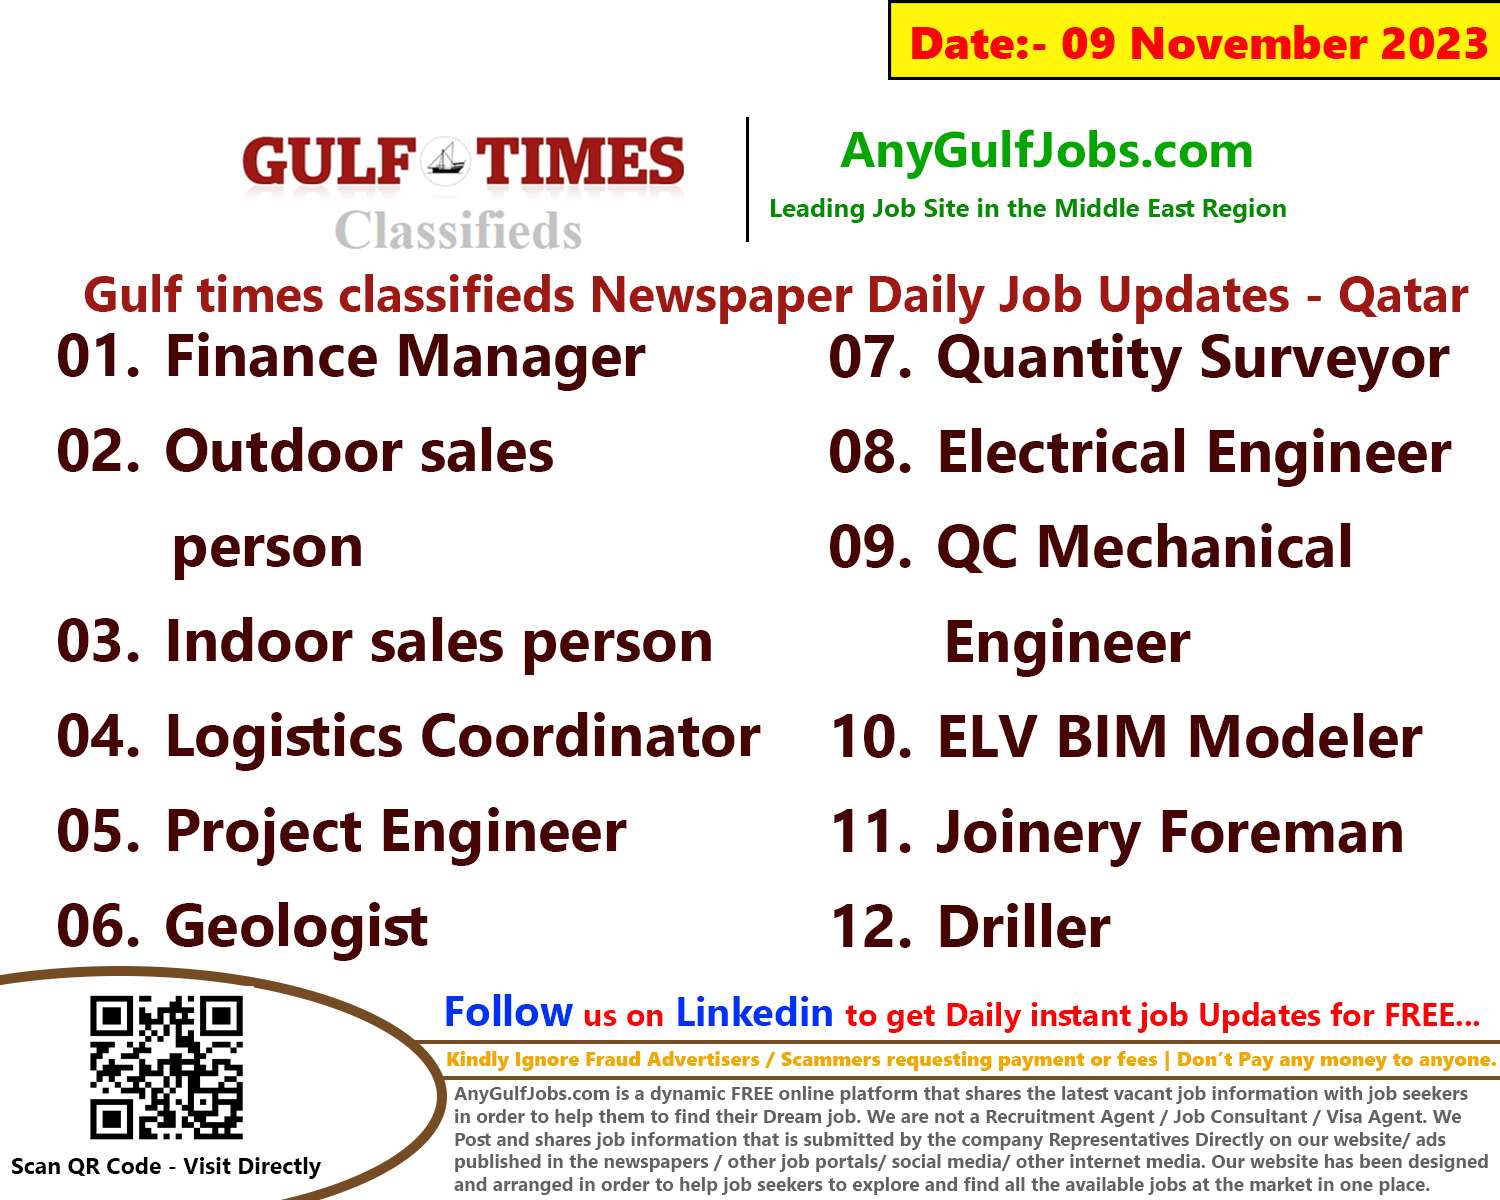 Gulf times classifieds Job Vacancies Qatar - 09 November 2023